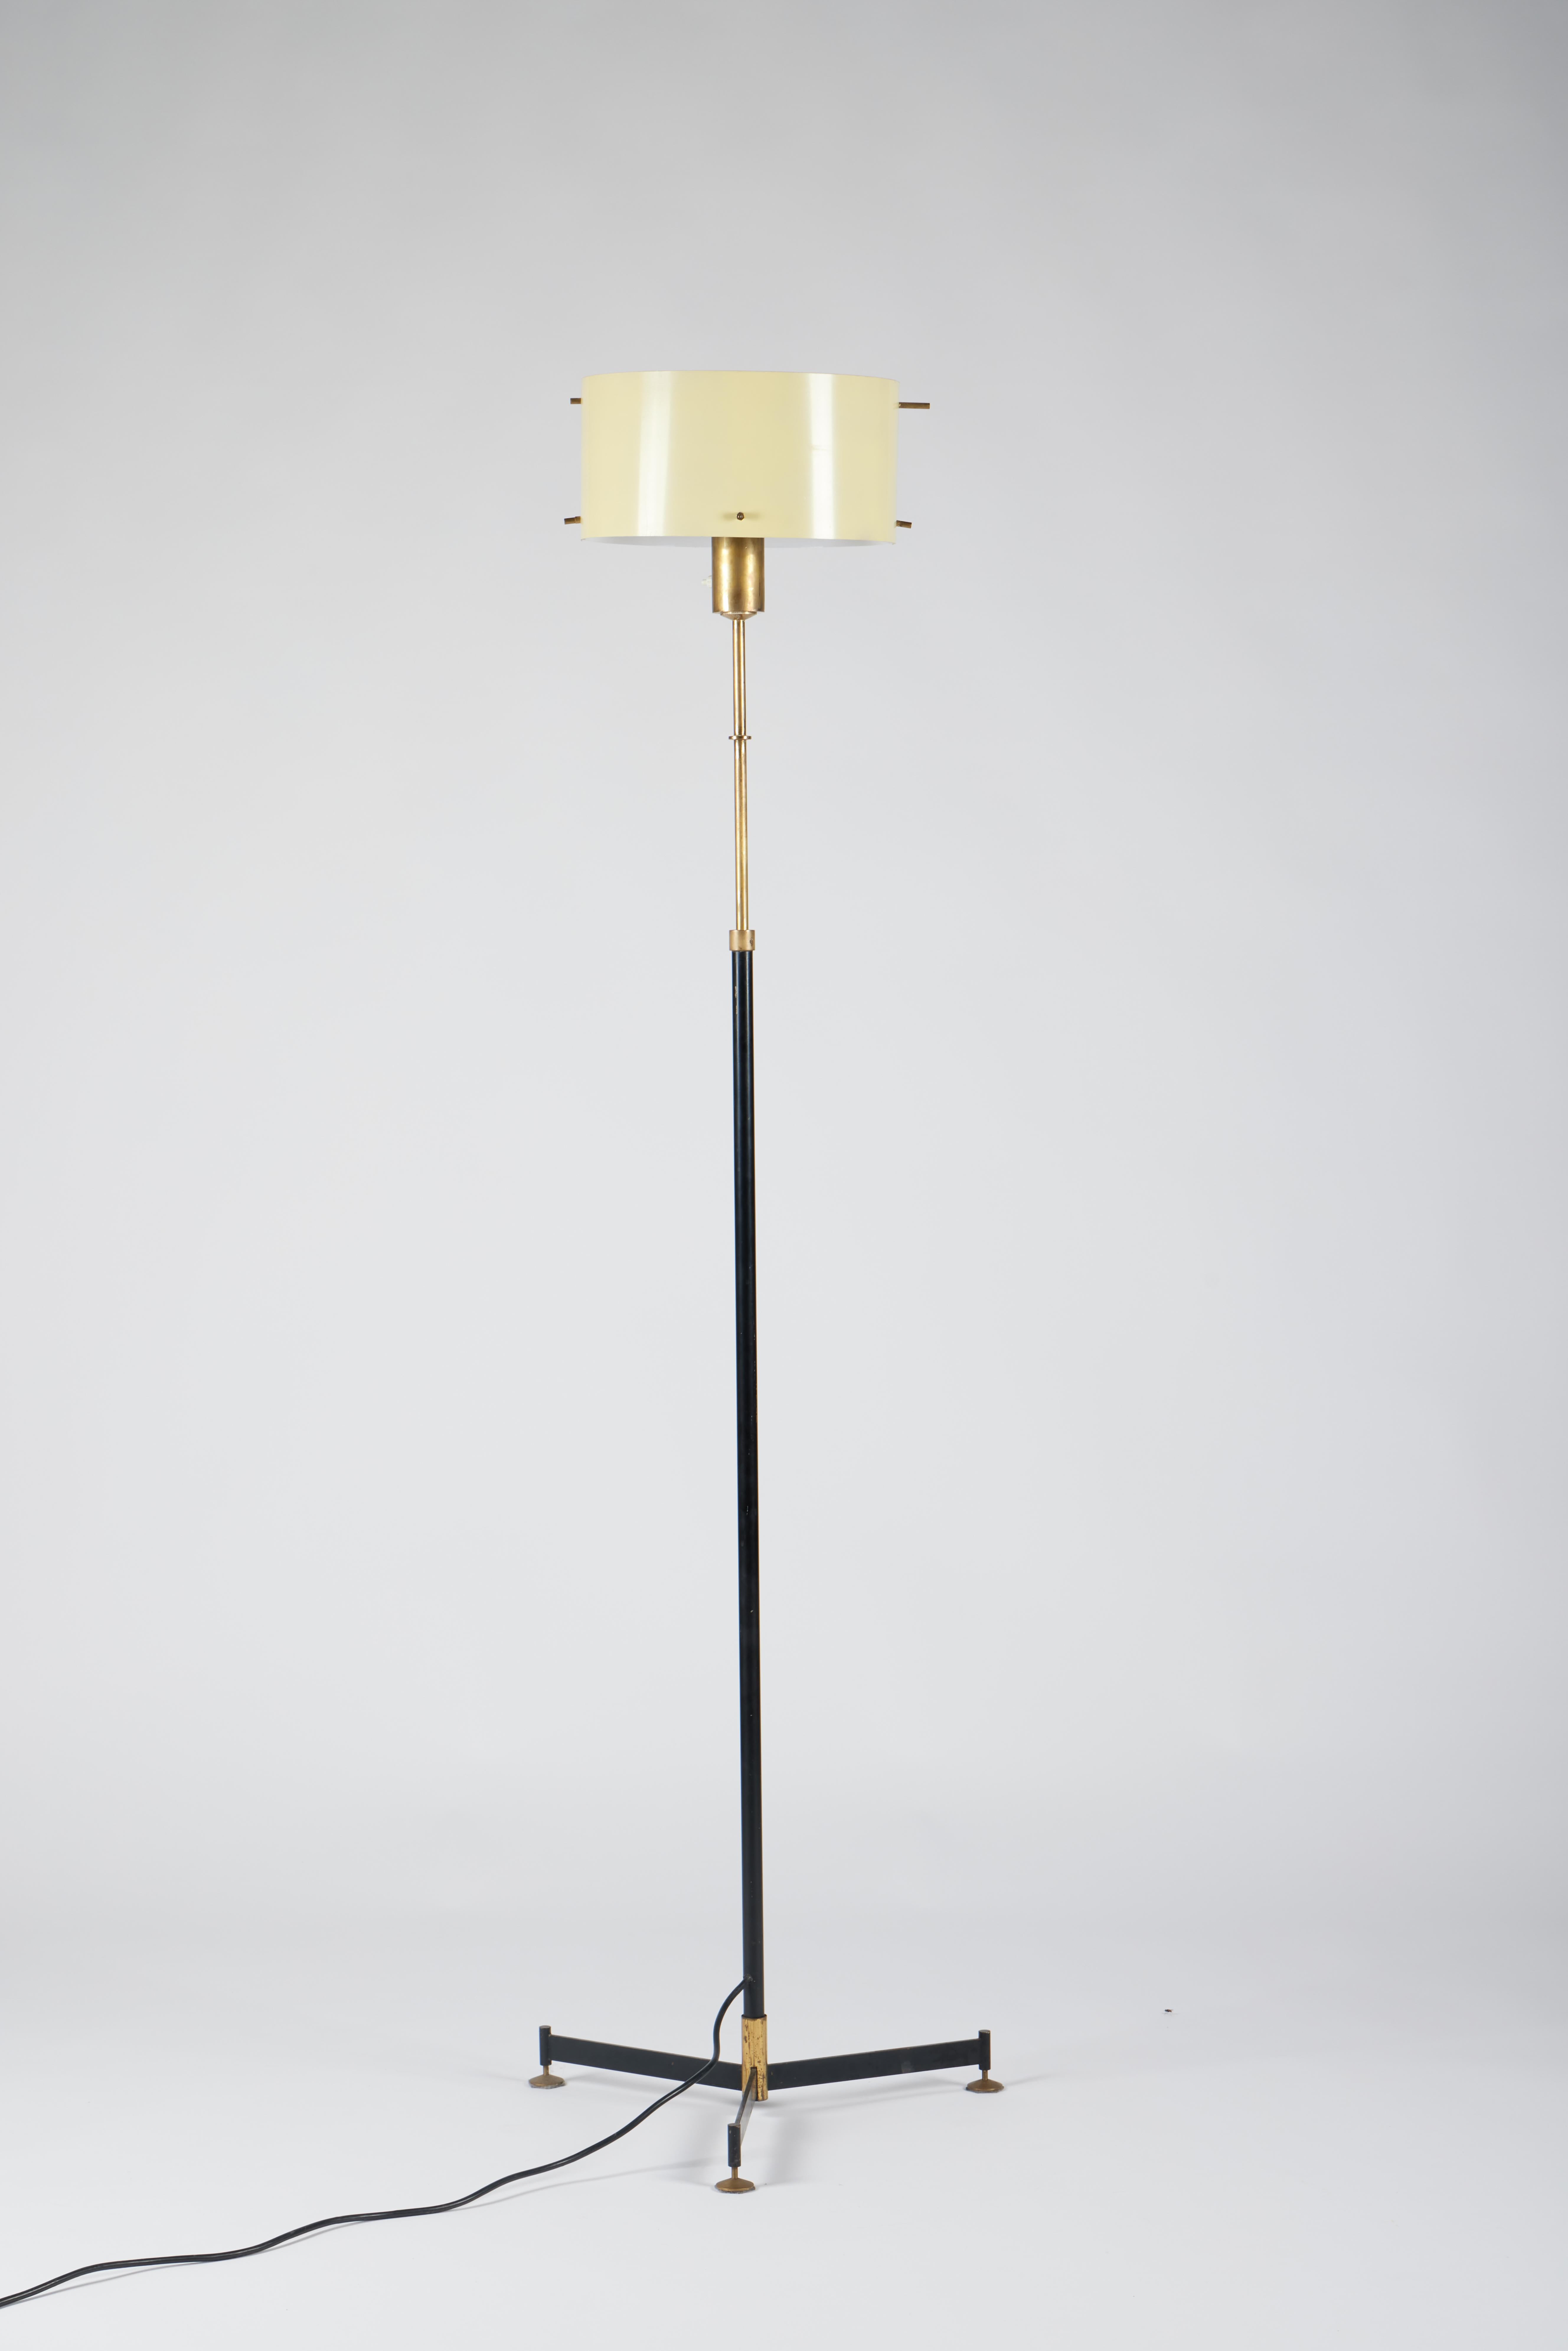 Italian Mid-Century, Modern Floor Lamp with Adjustable Height by Stilnovo, 1950s For Sale 2